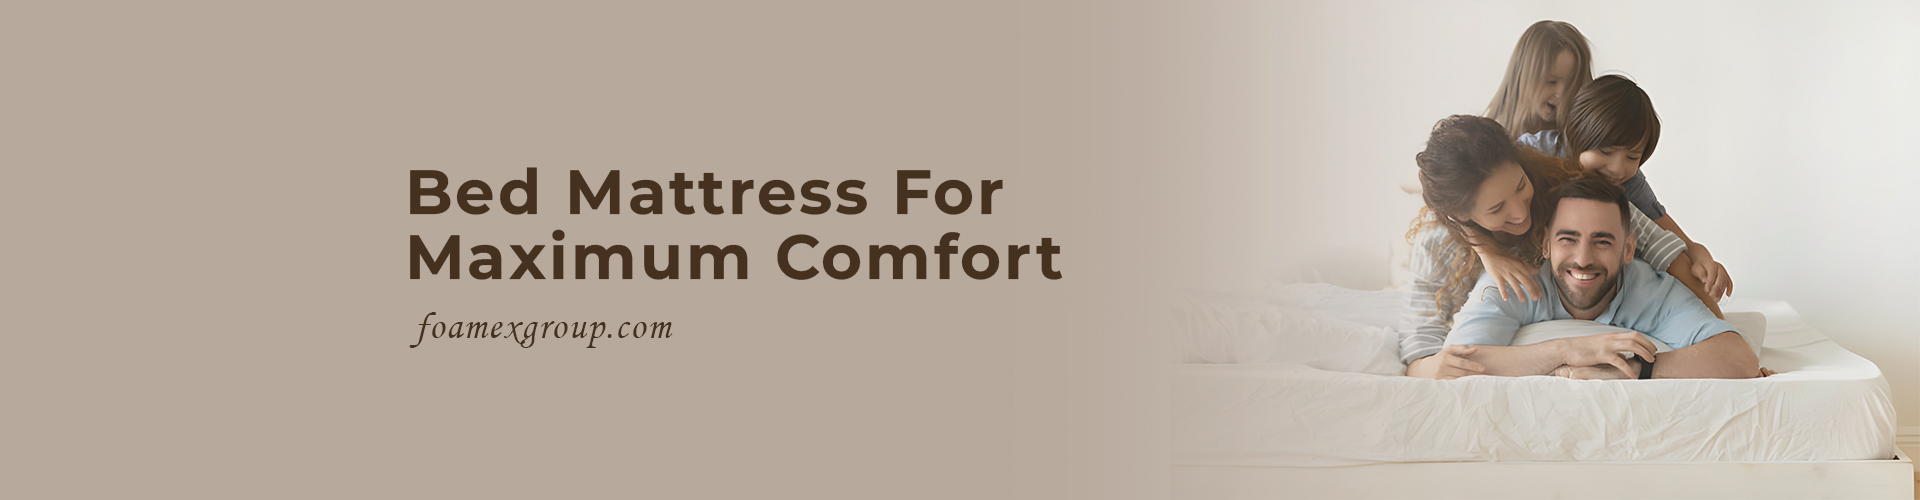 Bed Mattress for Maximum Comfort